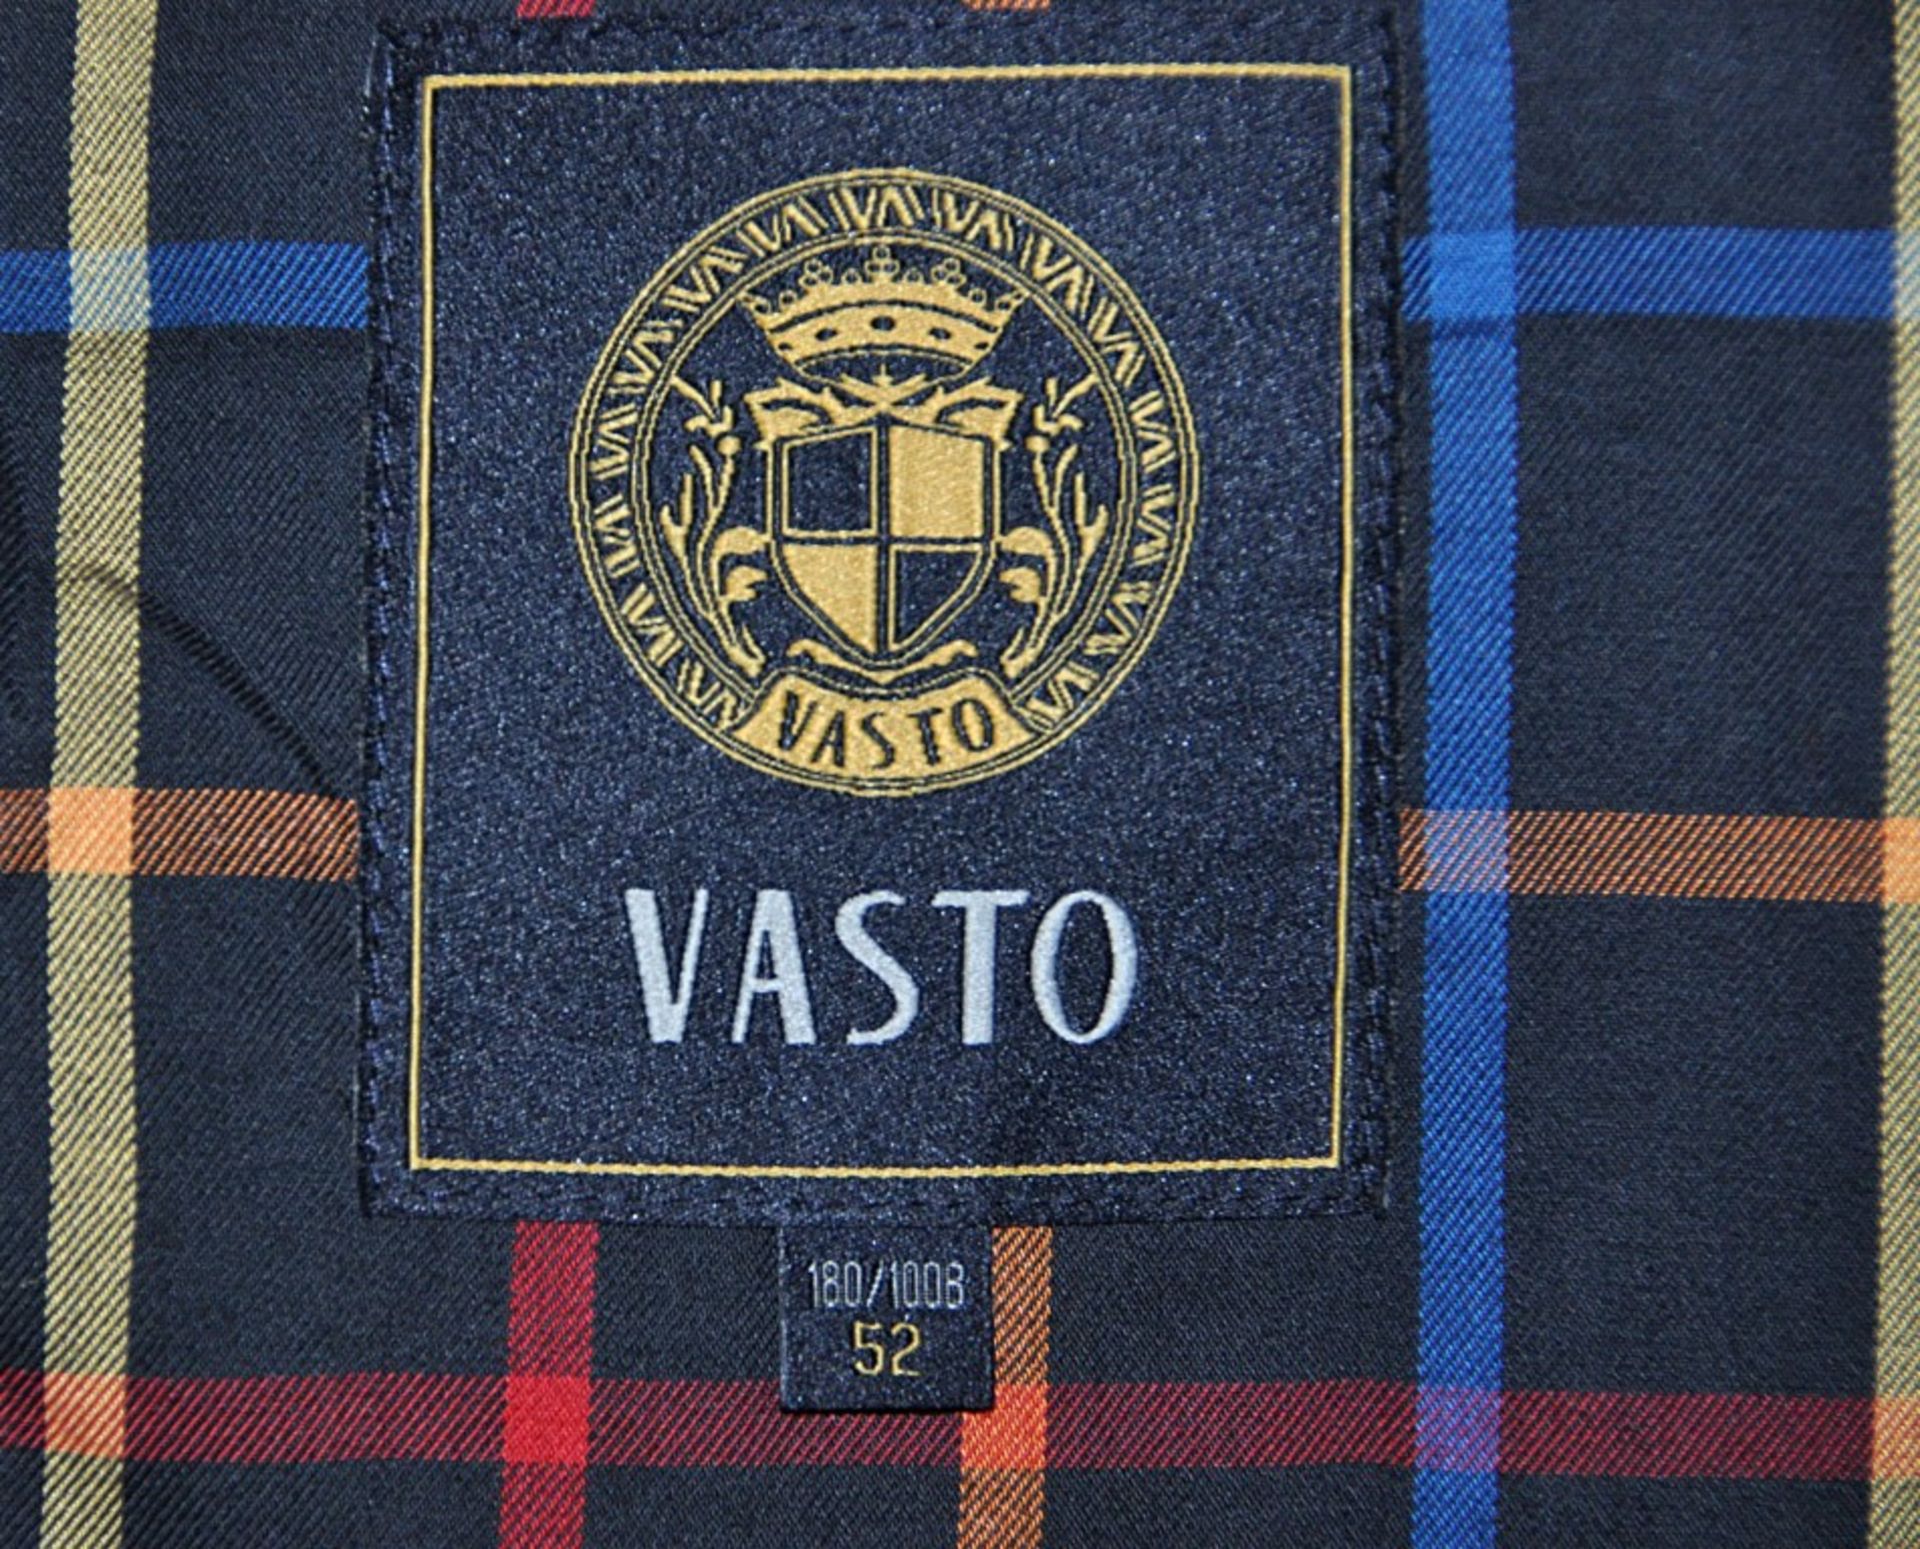 1 x Men's Trench Coat / Long Jacket By International Luxury Brand "Vasto" (BAD7107/221) – Size: - Image 5 of 5